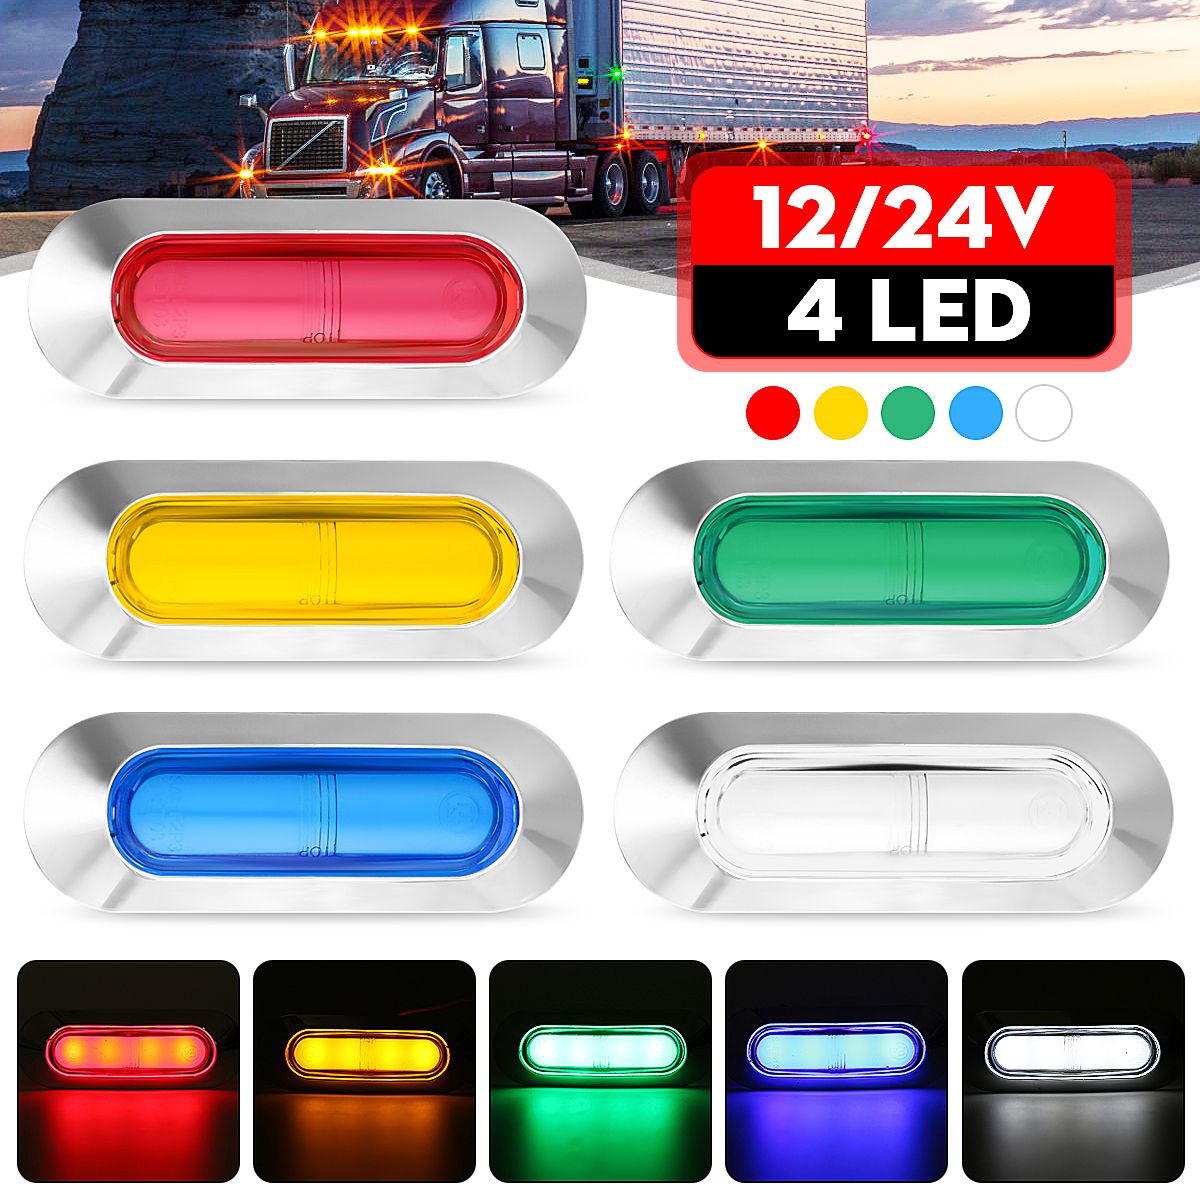 4LED-Side-Marker-Indicator-Light-Clearance-Lamp-For-12V-24V-Truck-Trailer-Lorry-Van-1727300